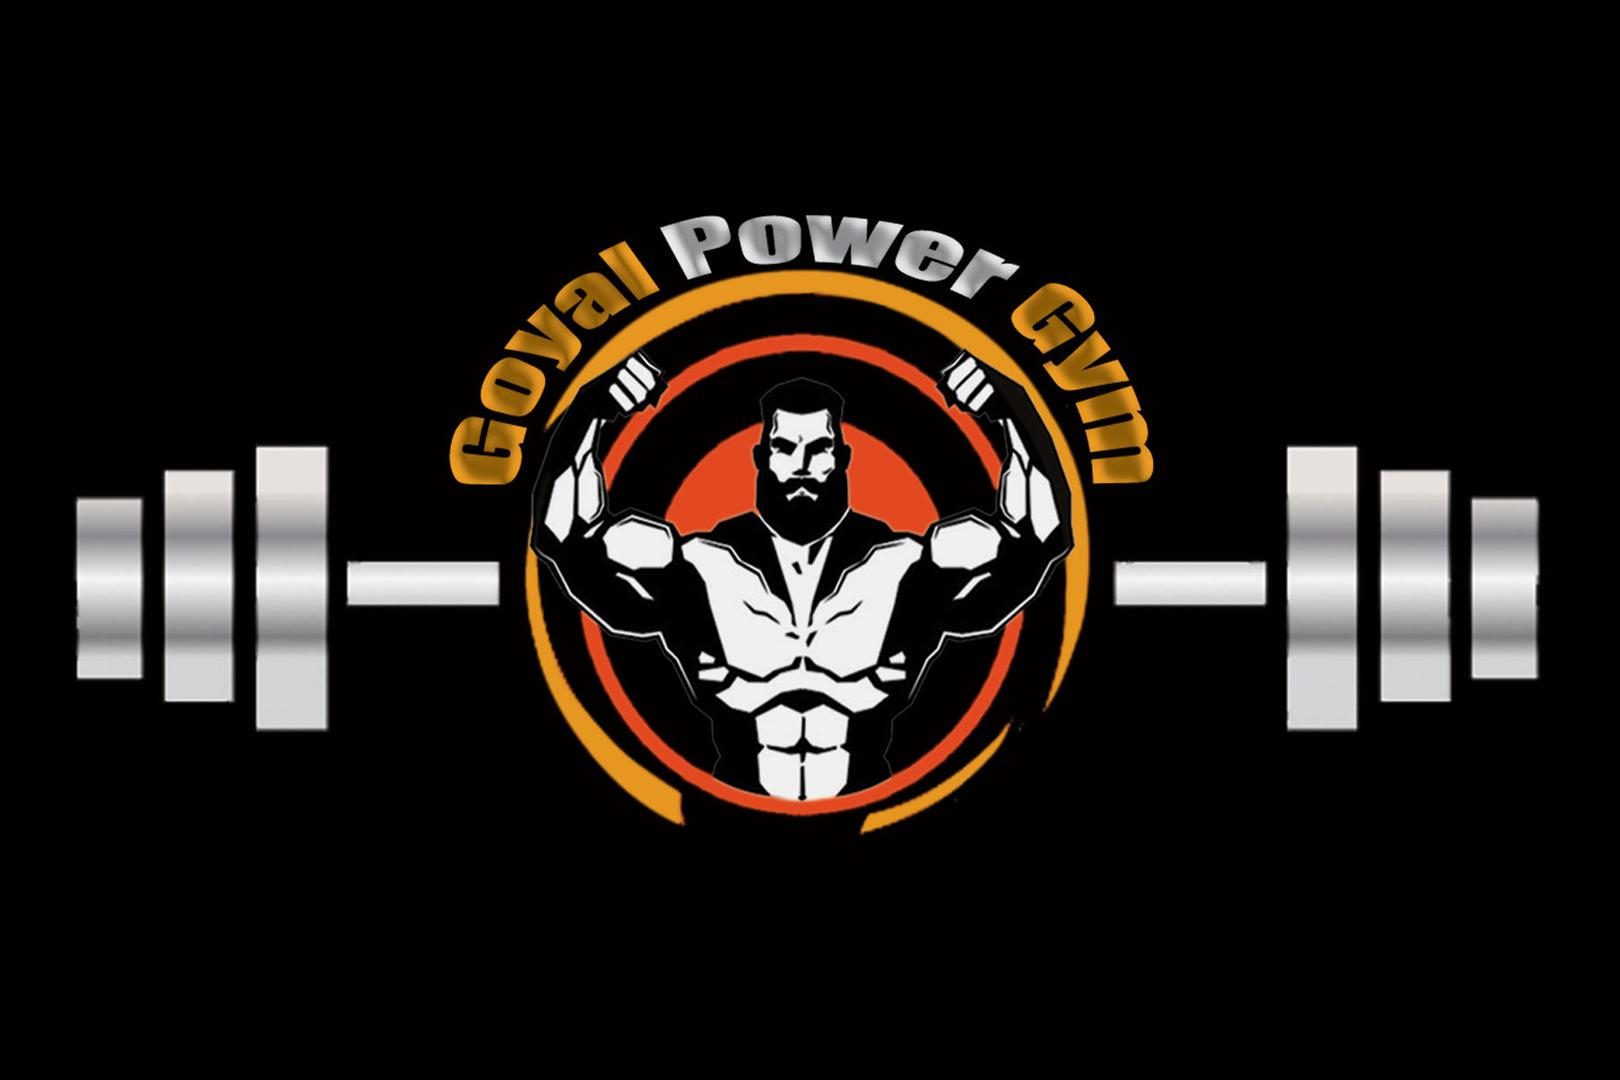 GOYAL POWER GYM - Logo